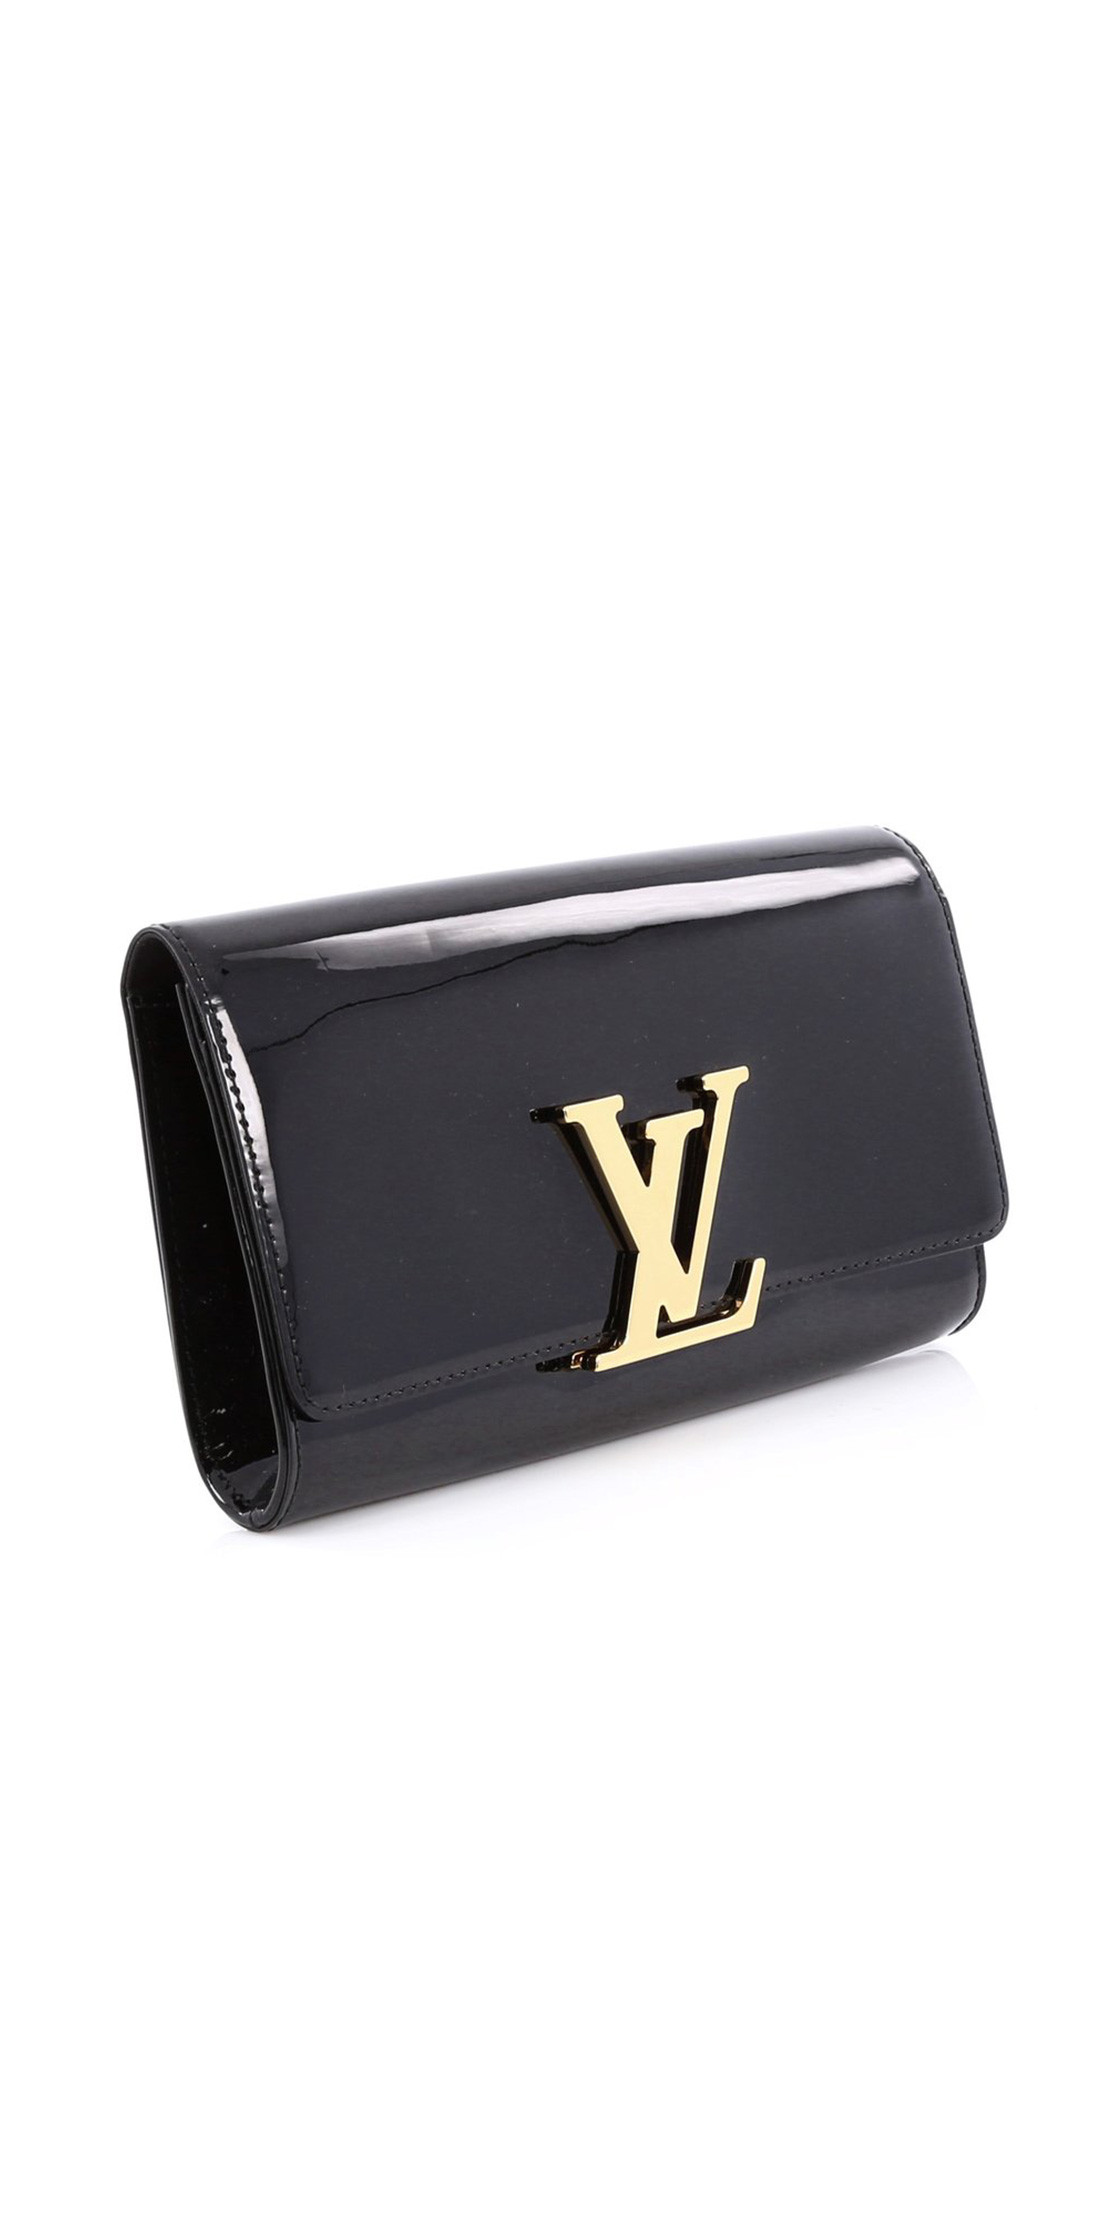 Louis Vuitton Patent Leather Clutch